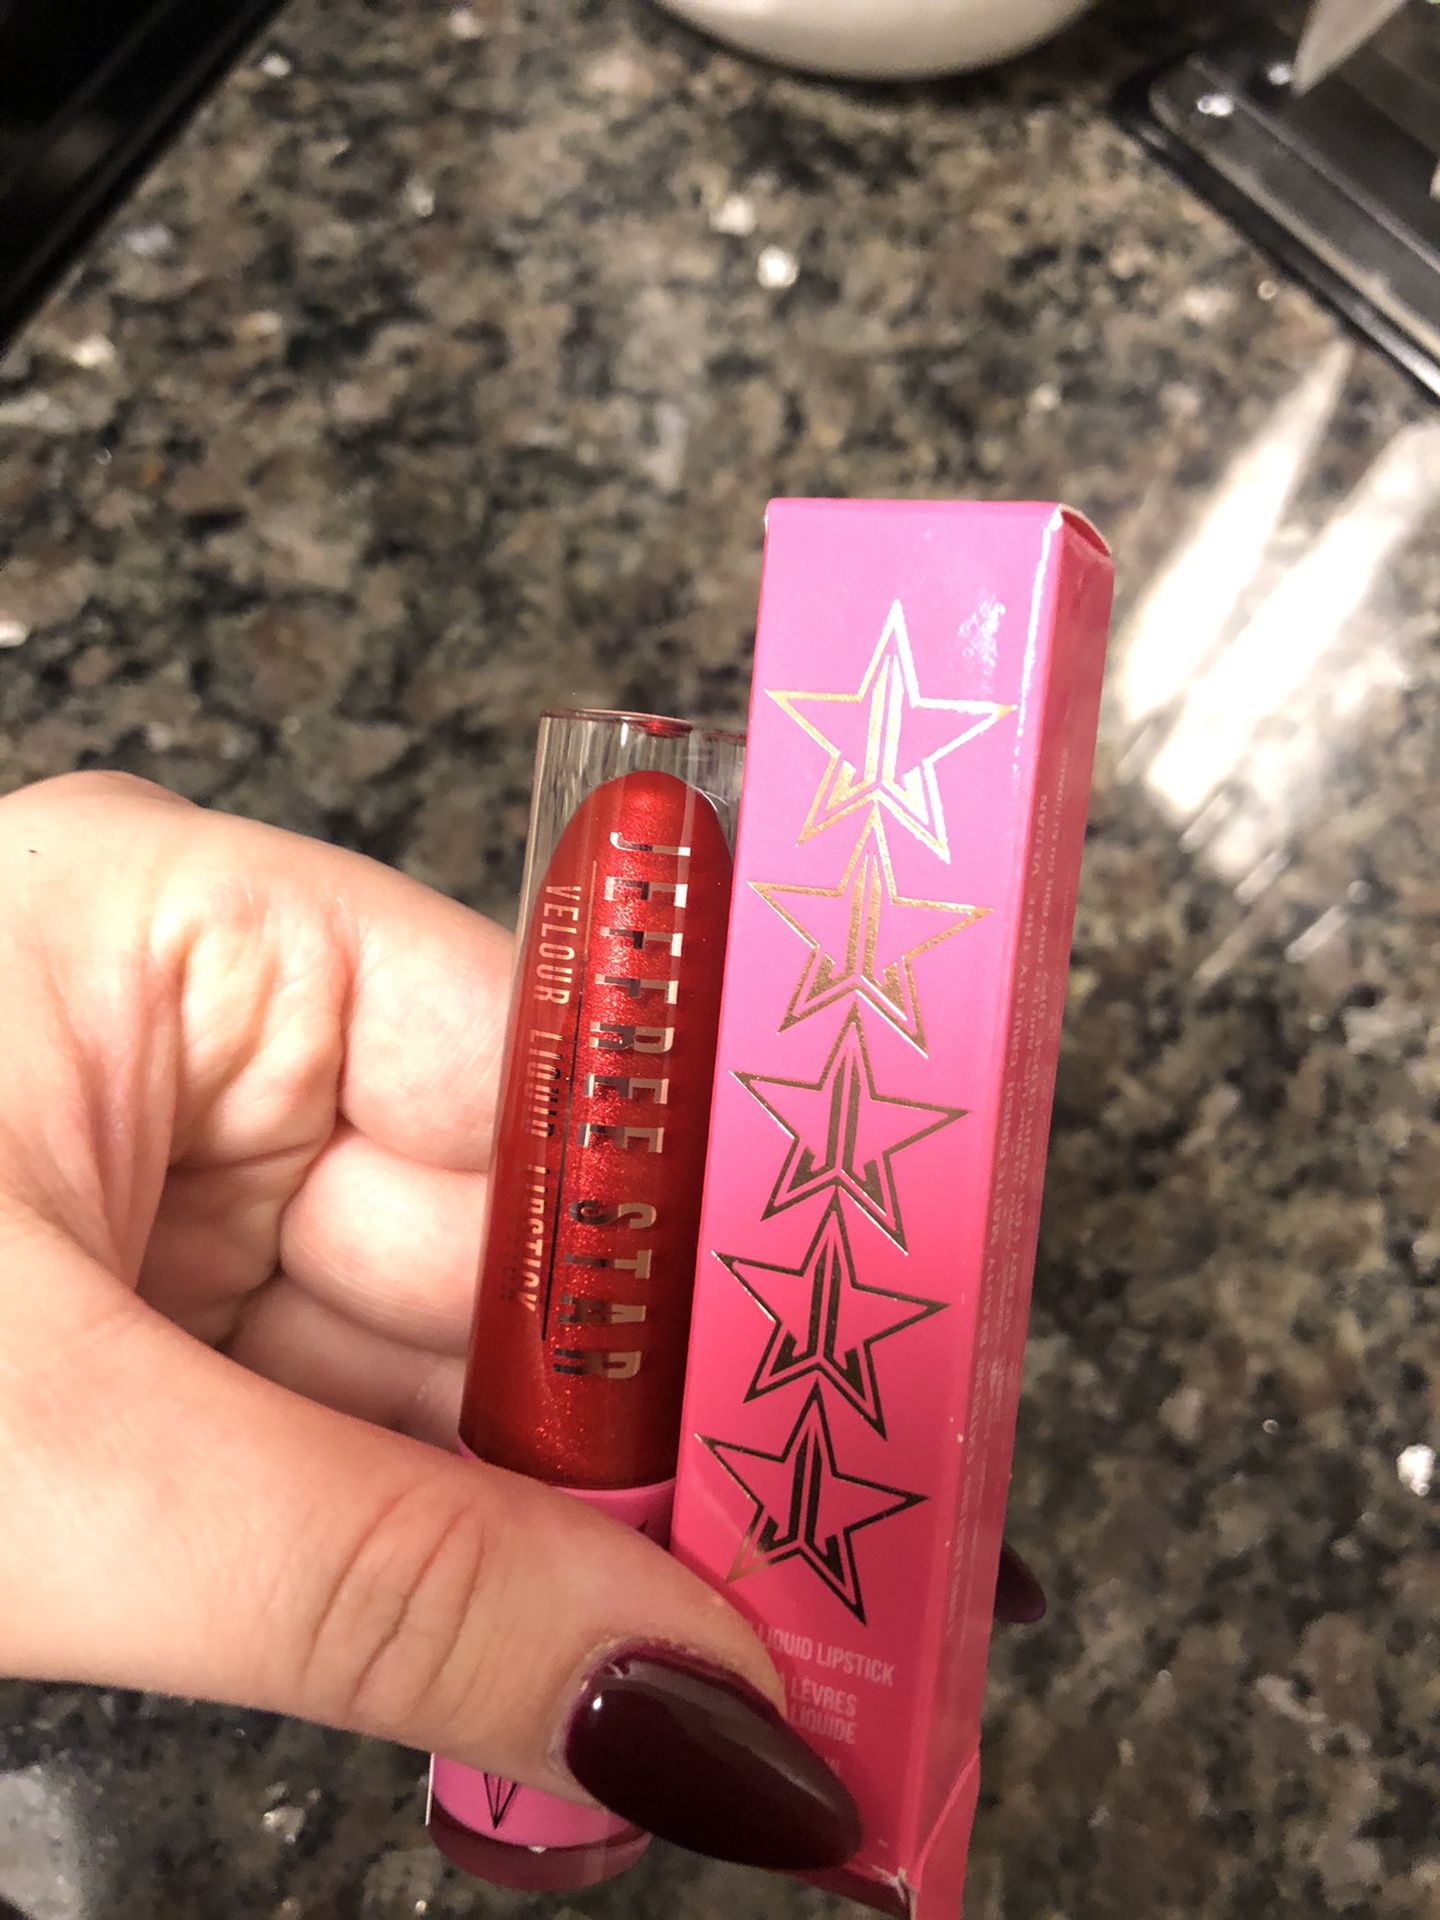 Jeffree Star Cosmetics Exclusive velour liquid lipstick